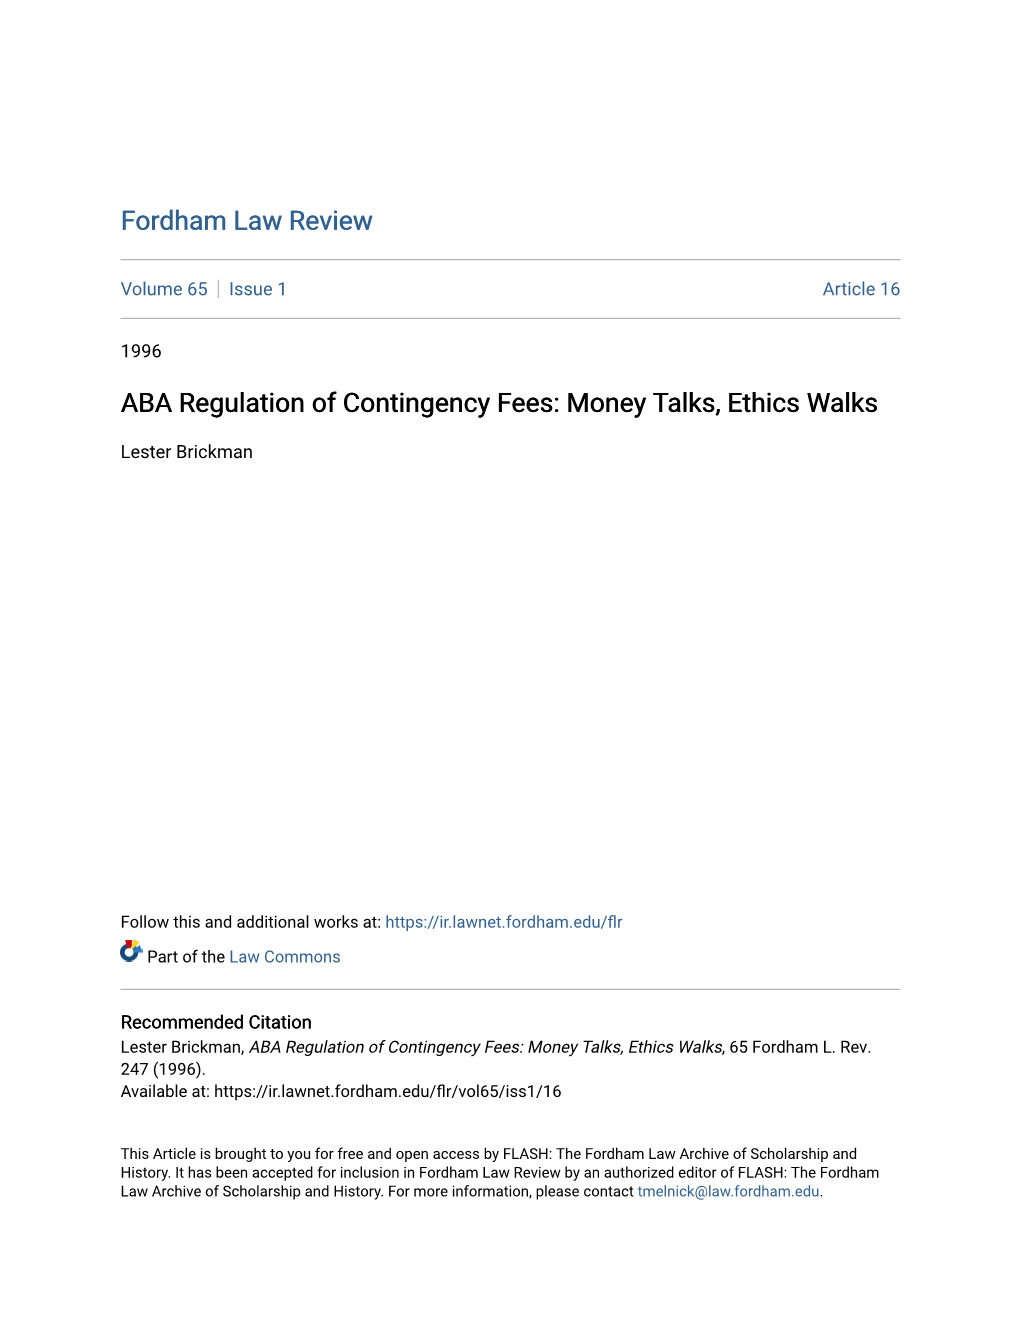 ABA Regulation of Contingency Fees: Money Talks, Ethics Walks